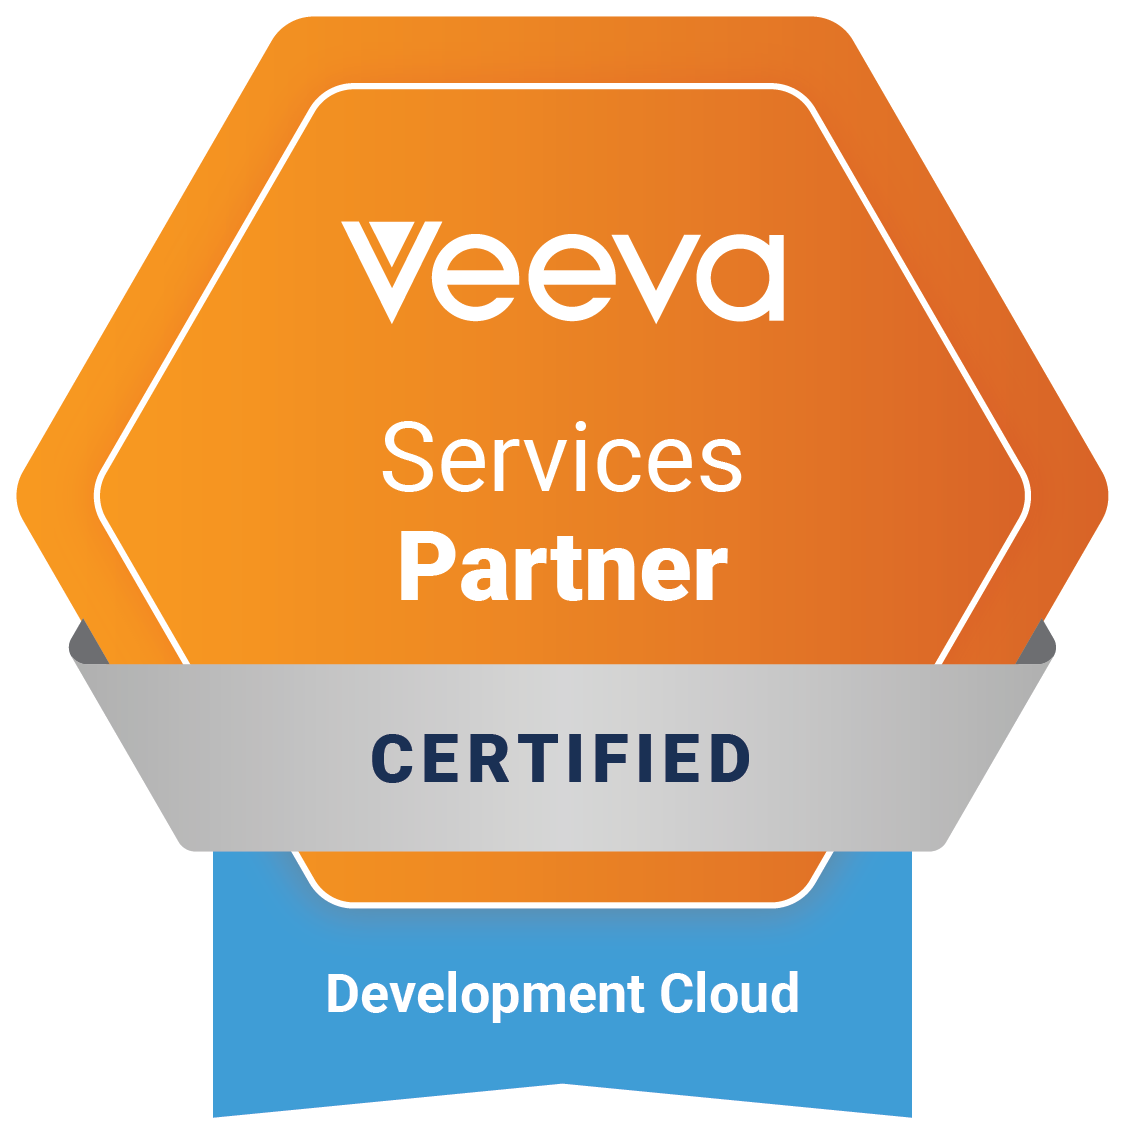 Veeva Services Alliance Partner Certification Badges with Year 2022_Services Partner_Development Cloud 2023